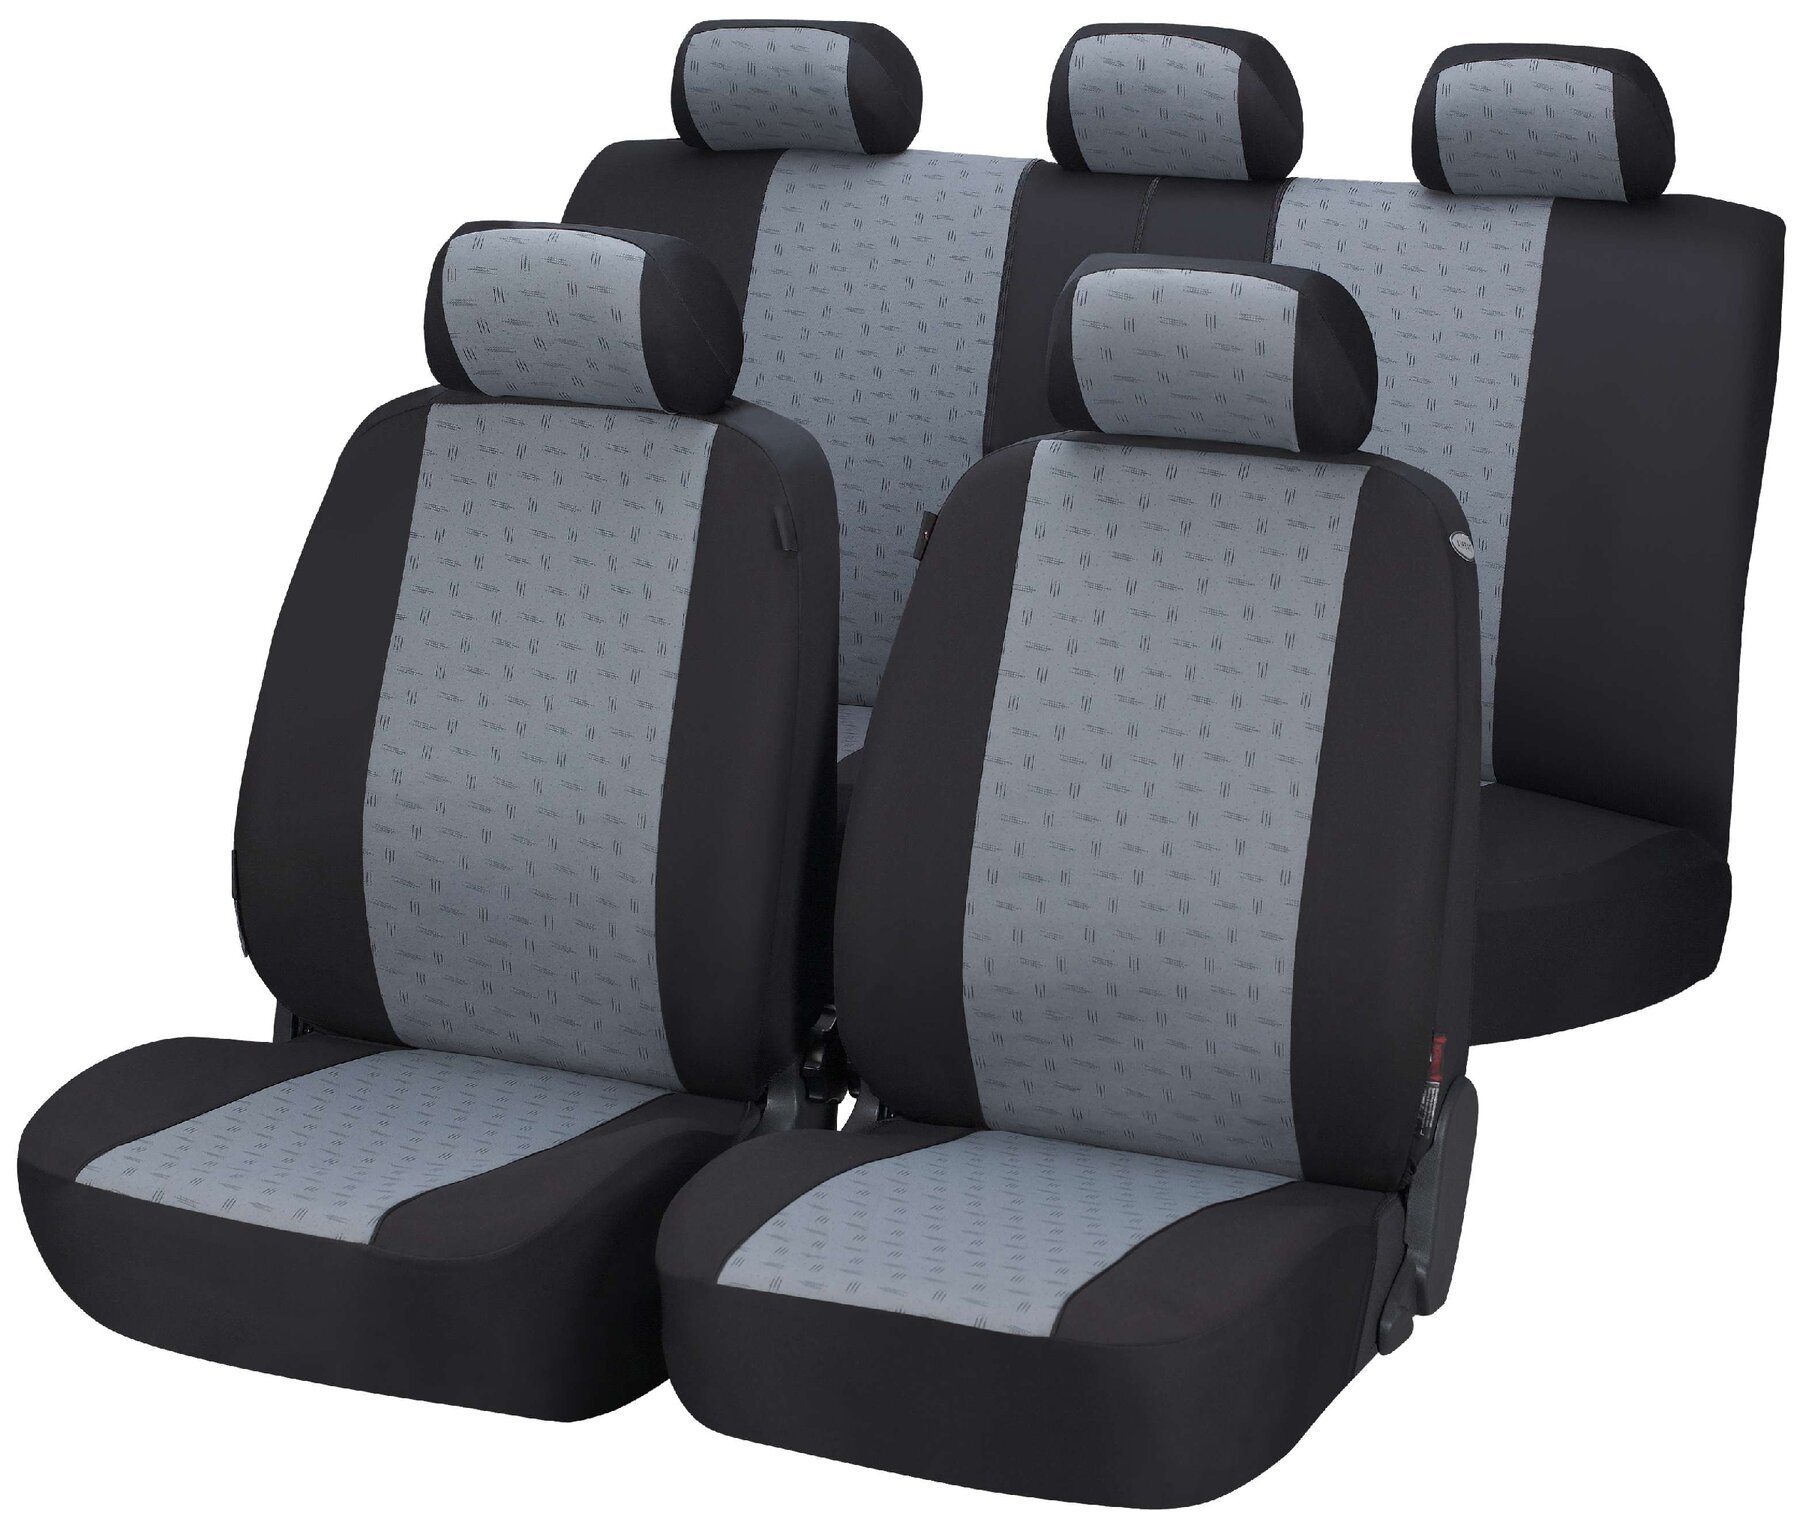 Car Seat covers Positano black grey Complete set